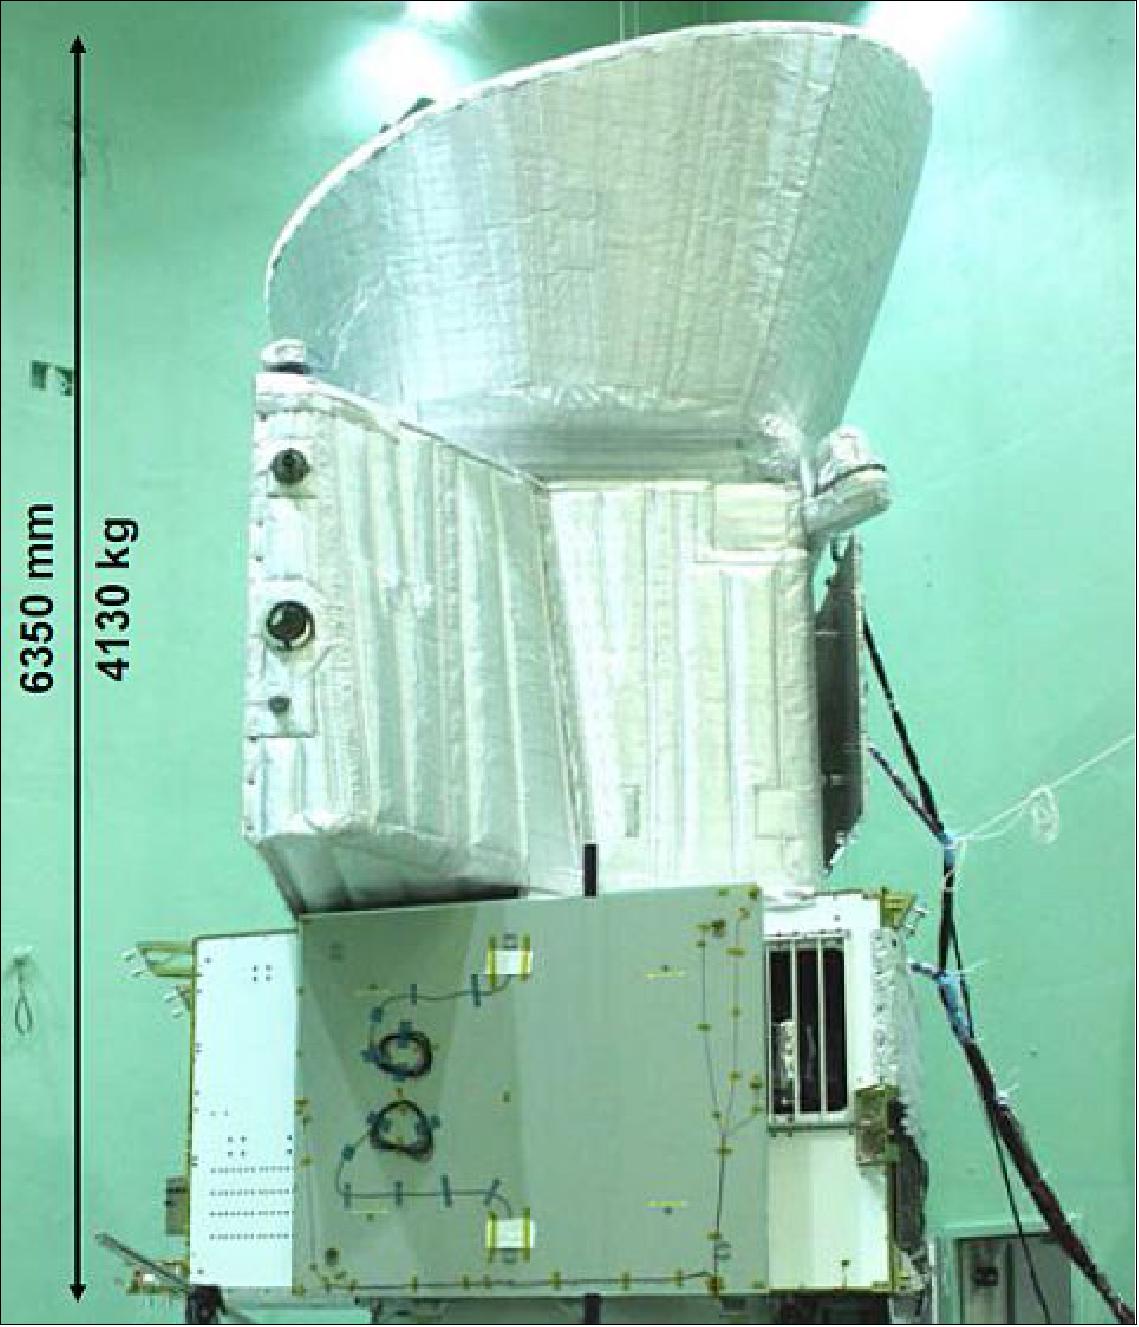 Figure 154: Illustration of the BepiColombo MCS (Mercury Composite Spacecraft), image credit: Airbus DS (Ref.22)